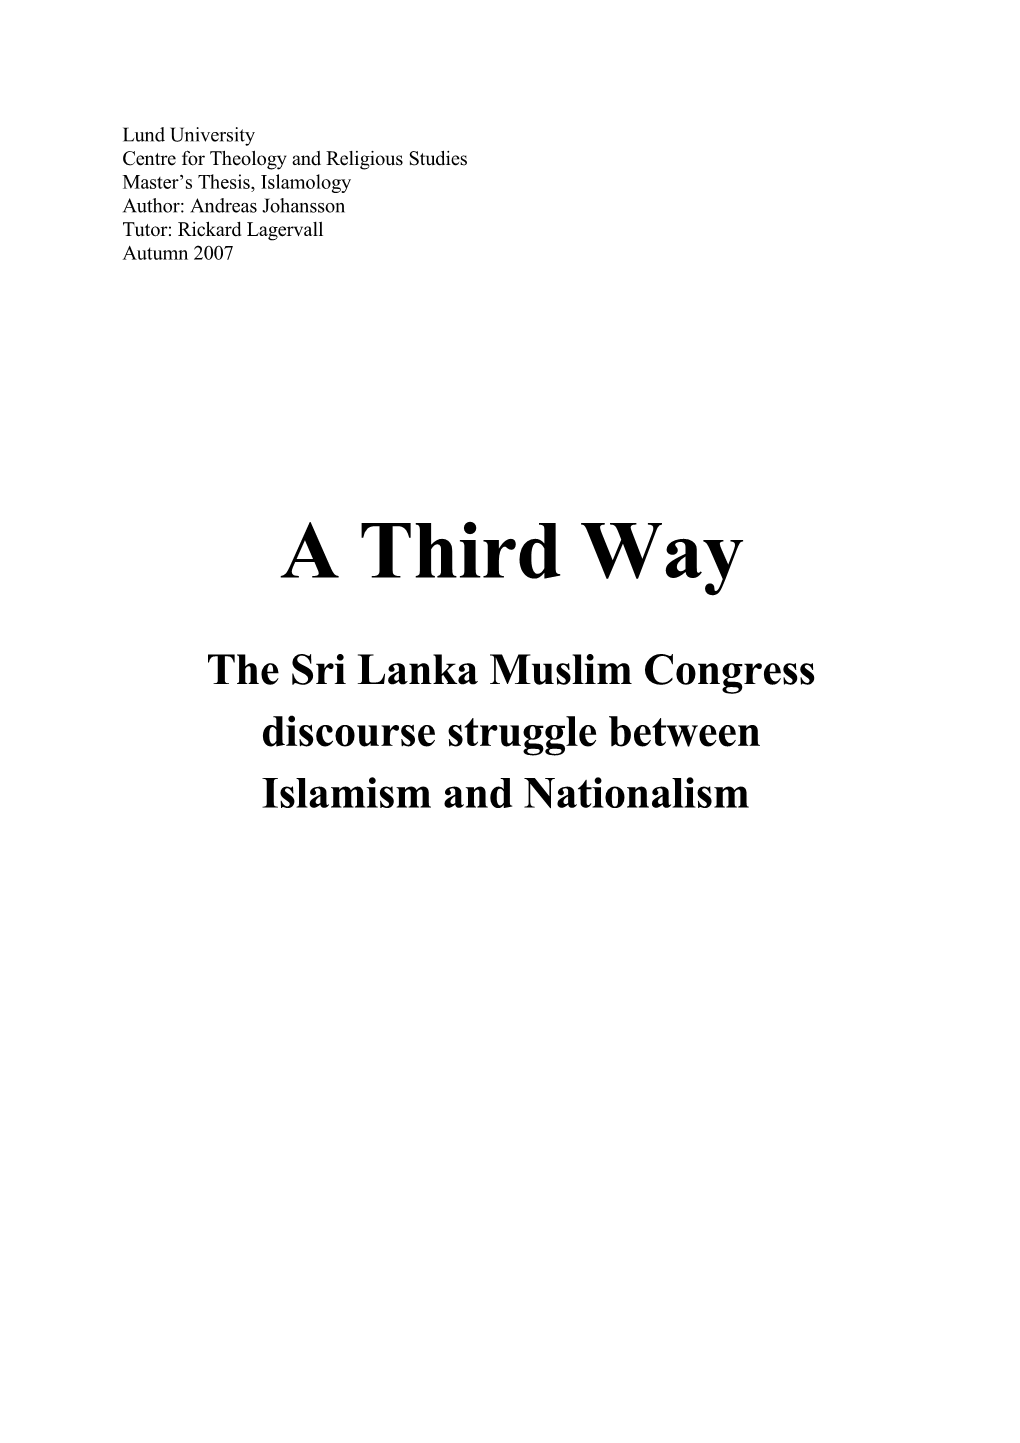 Contextualizing Sri Lanka Muslim Congress